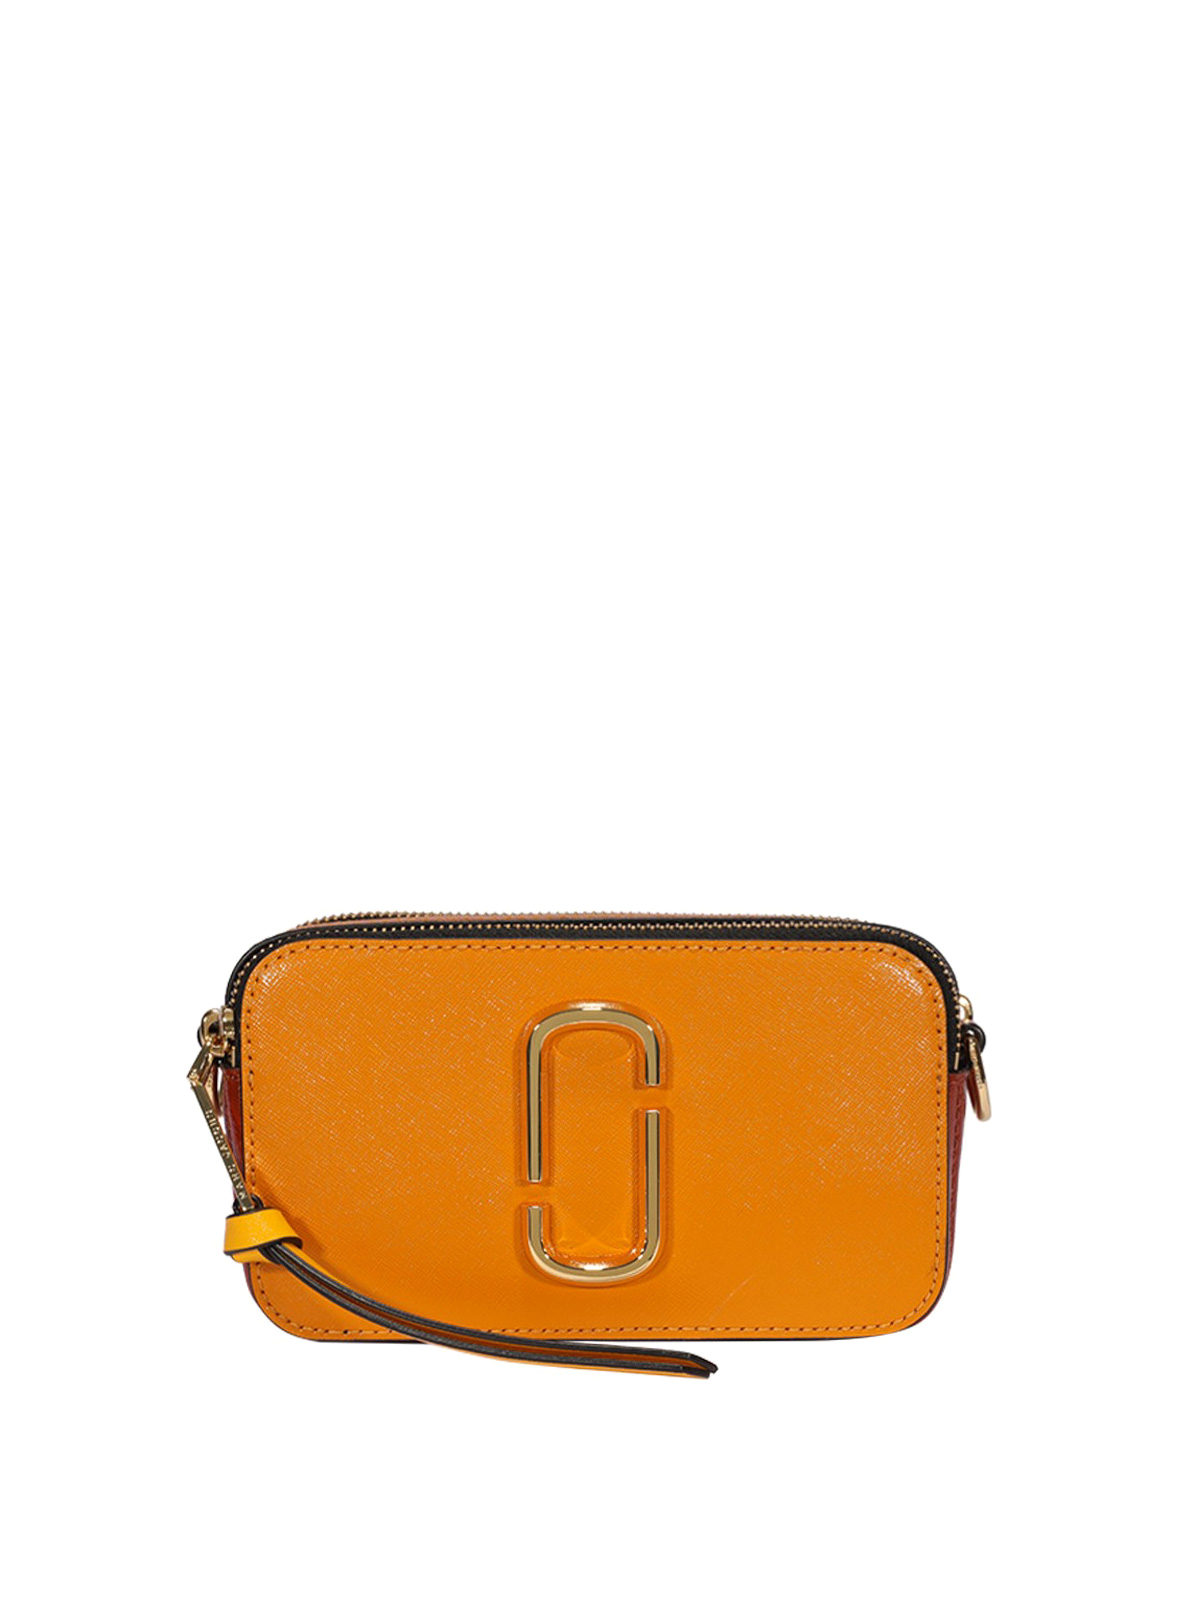 Cross body bags Marc Jacobs - The Snapshort small orange camera bag -  M0012007751